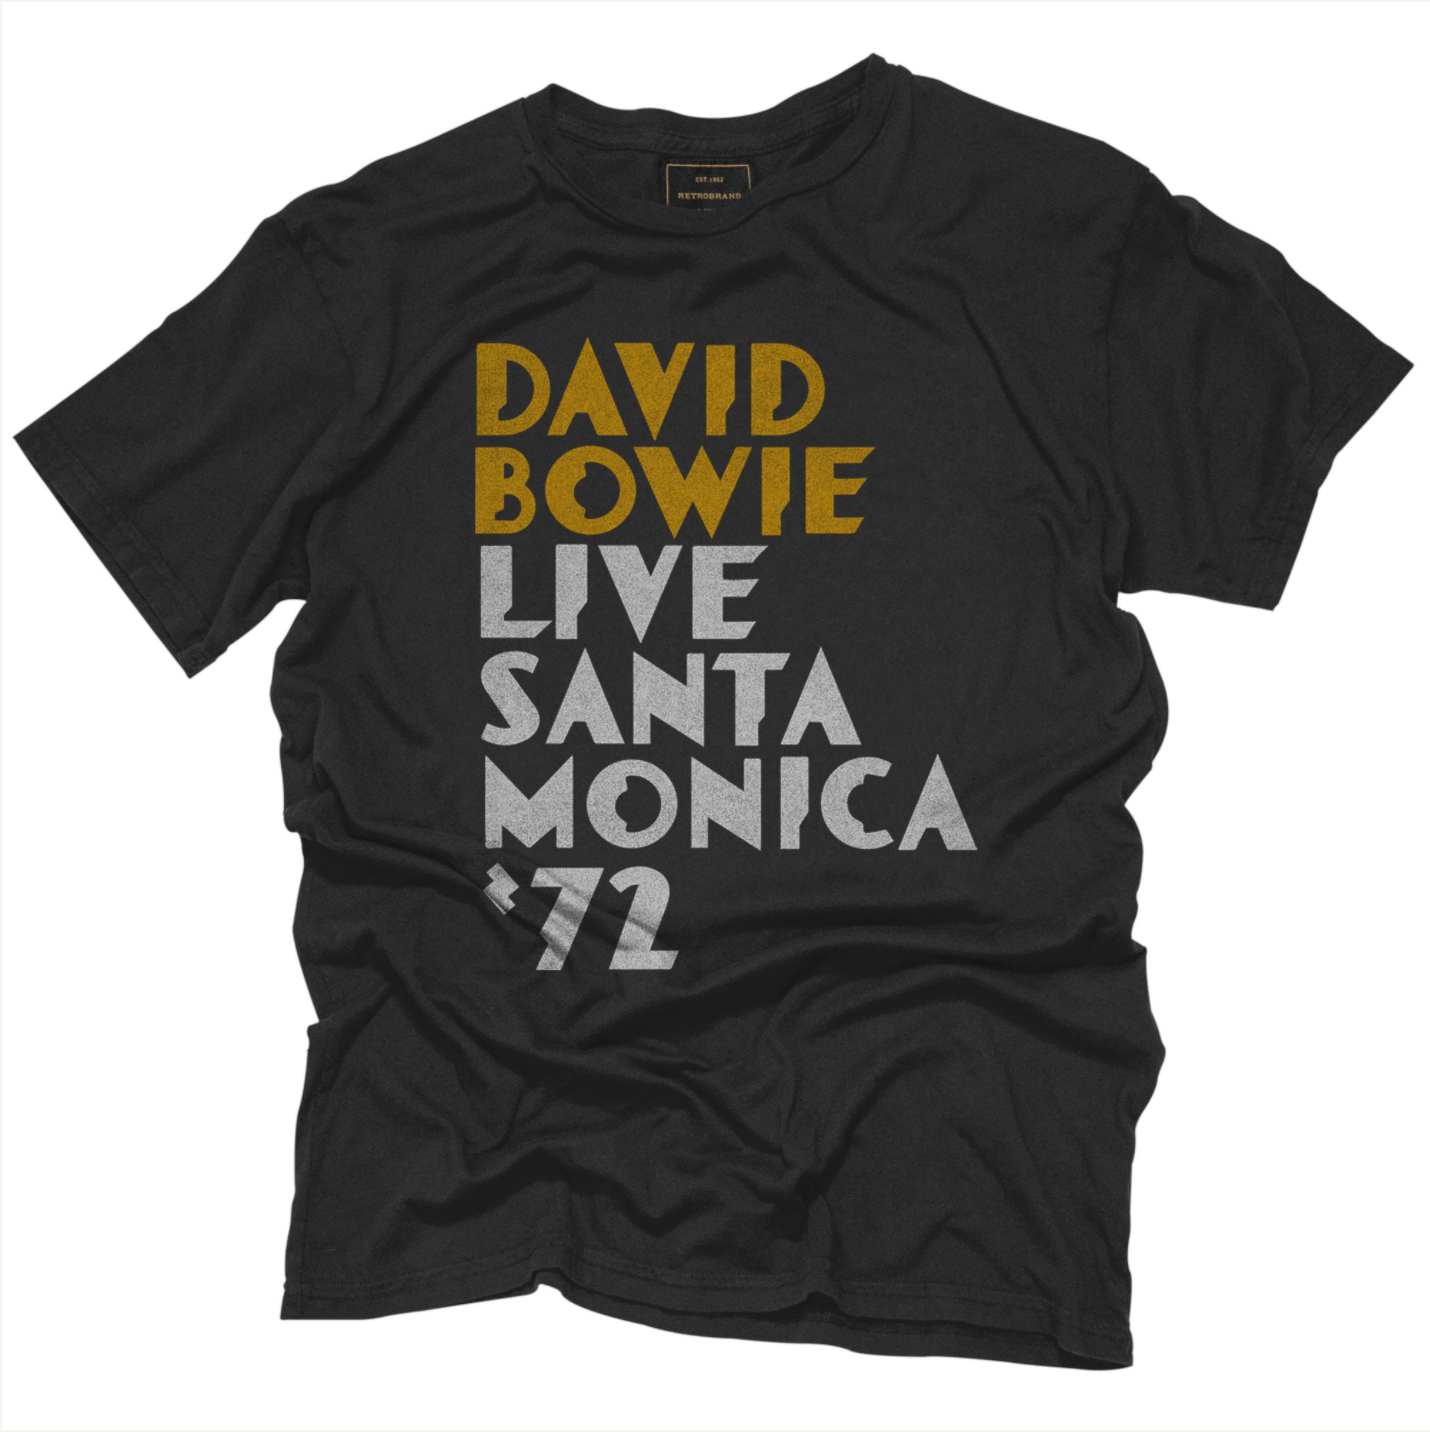 David Bowie Live Santa Monica '72 Black Label Tee